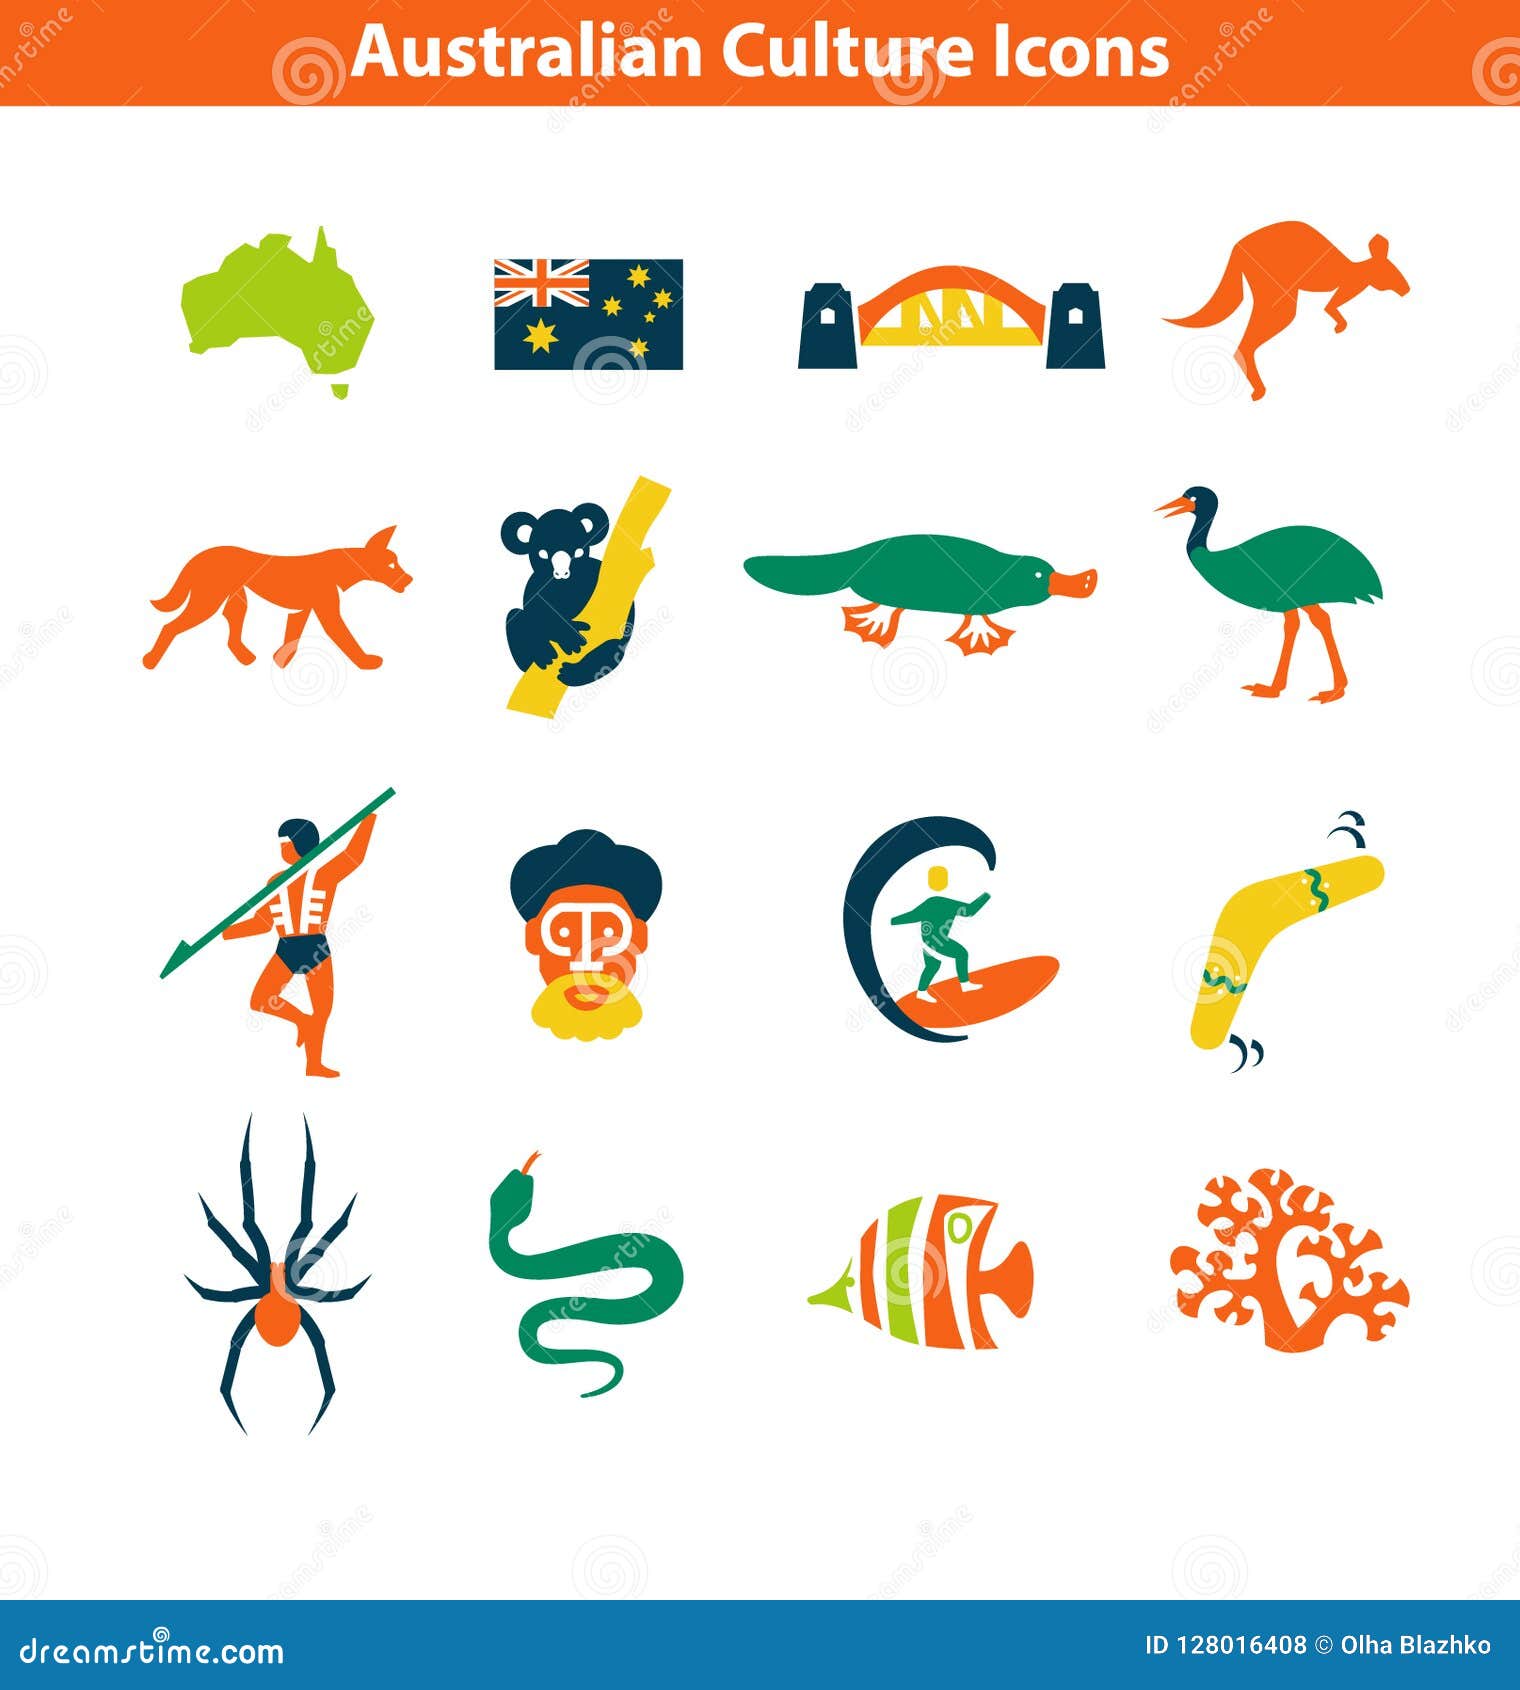 Formuler skildring Mursten Australian Culture Icon Set. National Signs and Landmarks Stock Vector -  Illustration of aboriginal, icon: 128016408